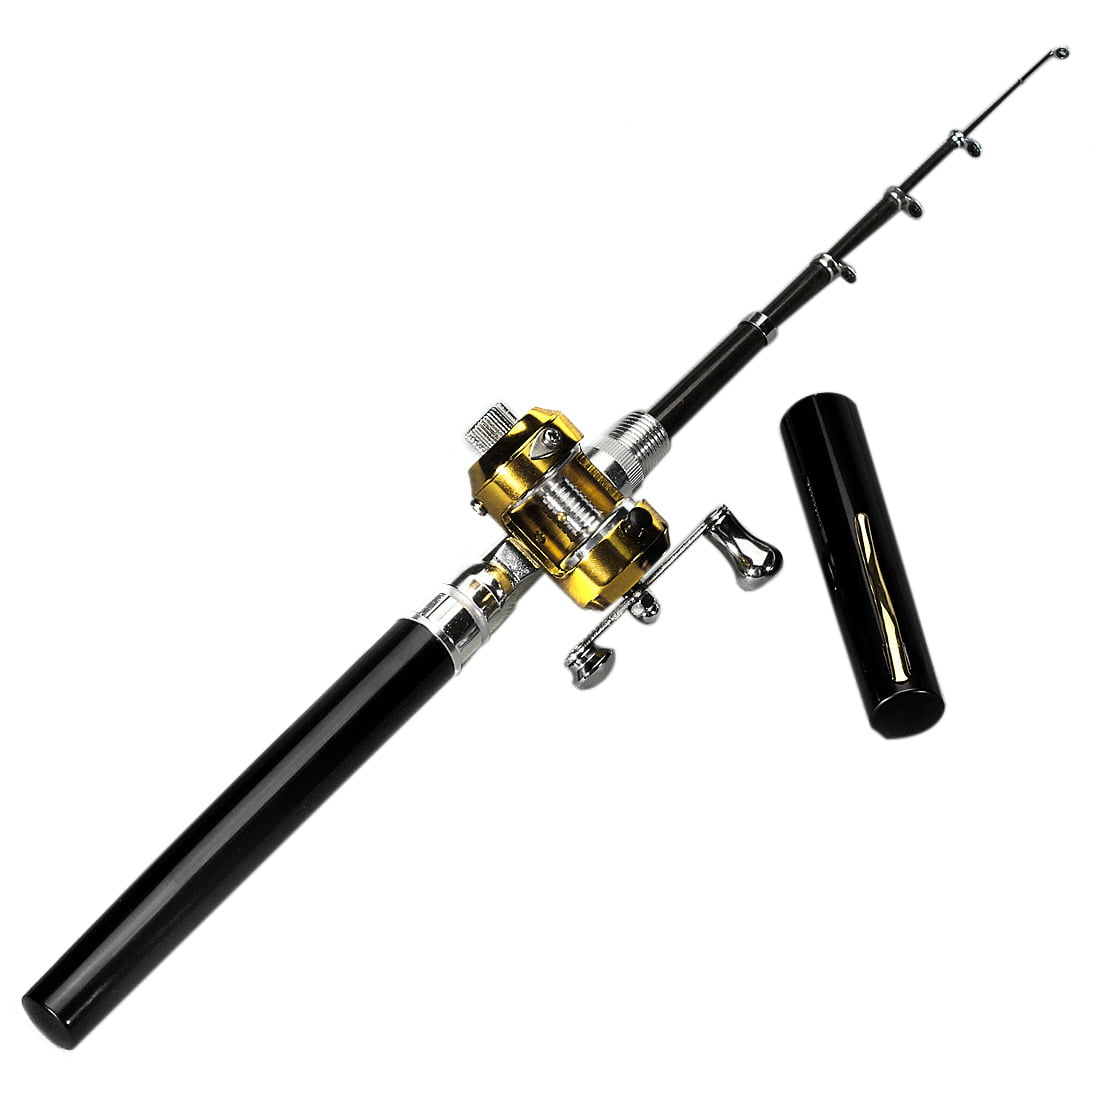 Details about   Mini Fishing Rod Telescopic Portable Pocket Alloy Fibreglass Pen   Pole Reel 